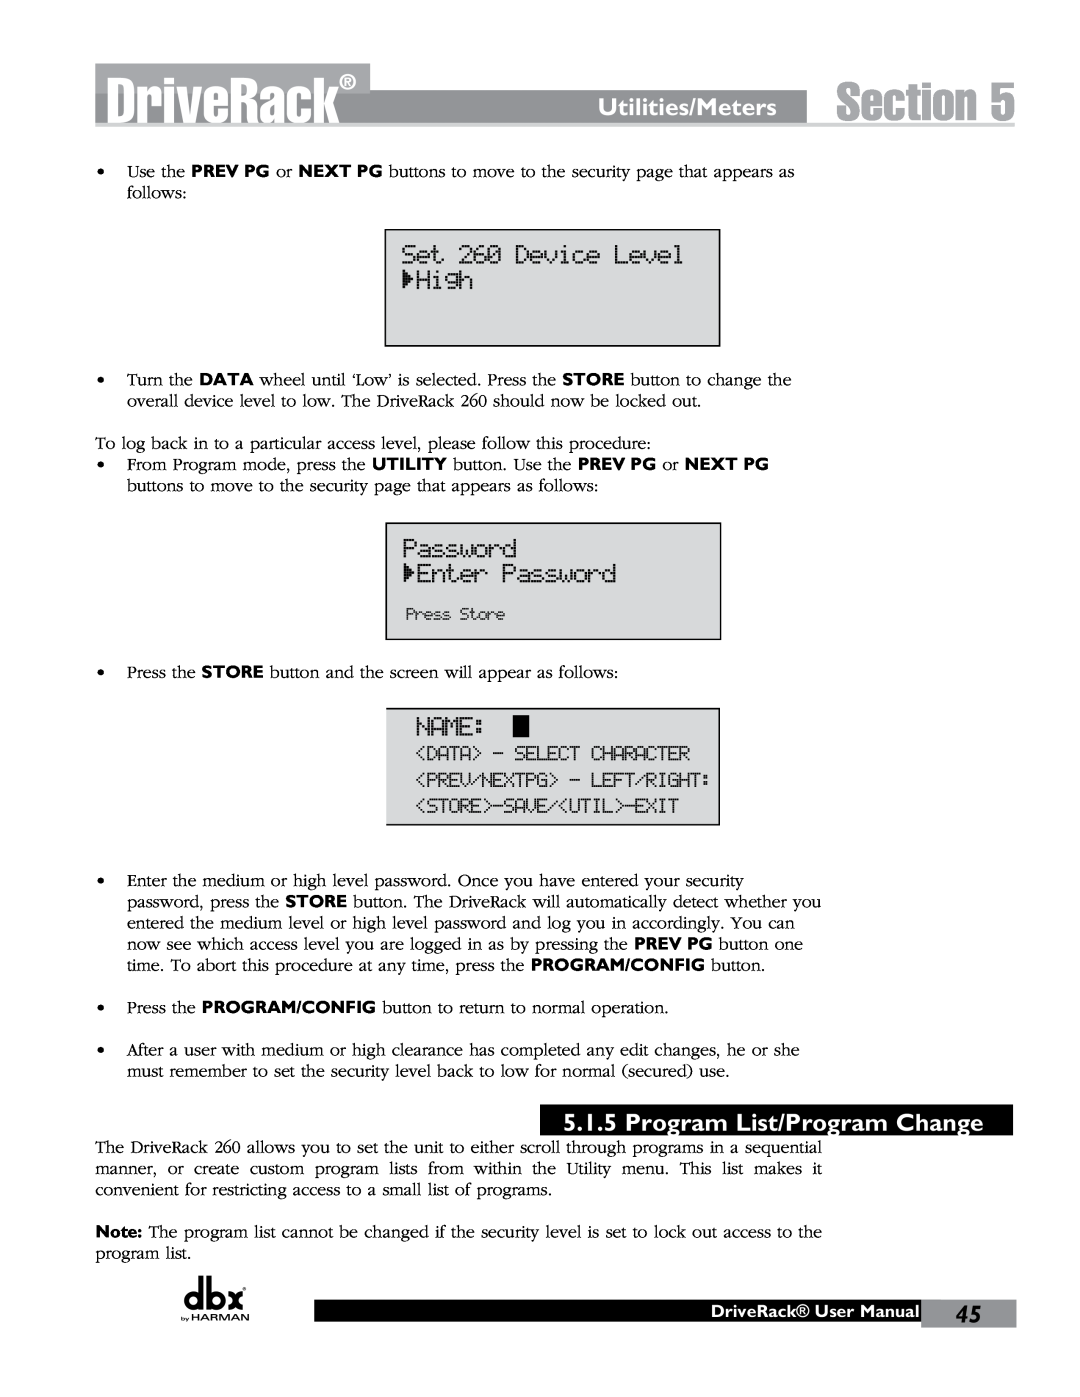 JBL 260 user manual Section, Utilities/Meters, Program List/Program Change, DriveRack User Manual 